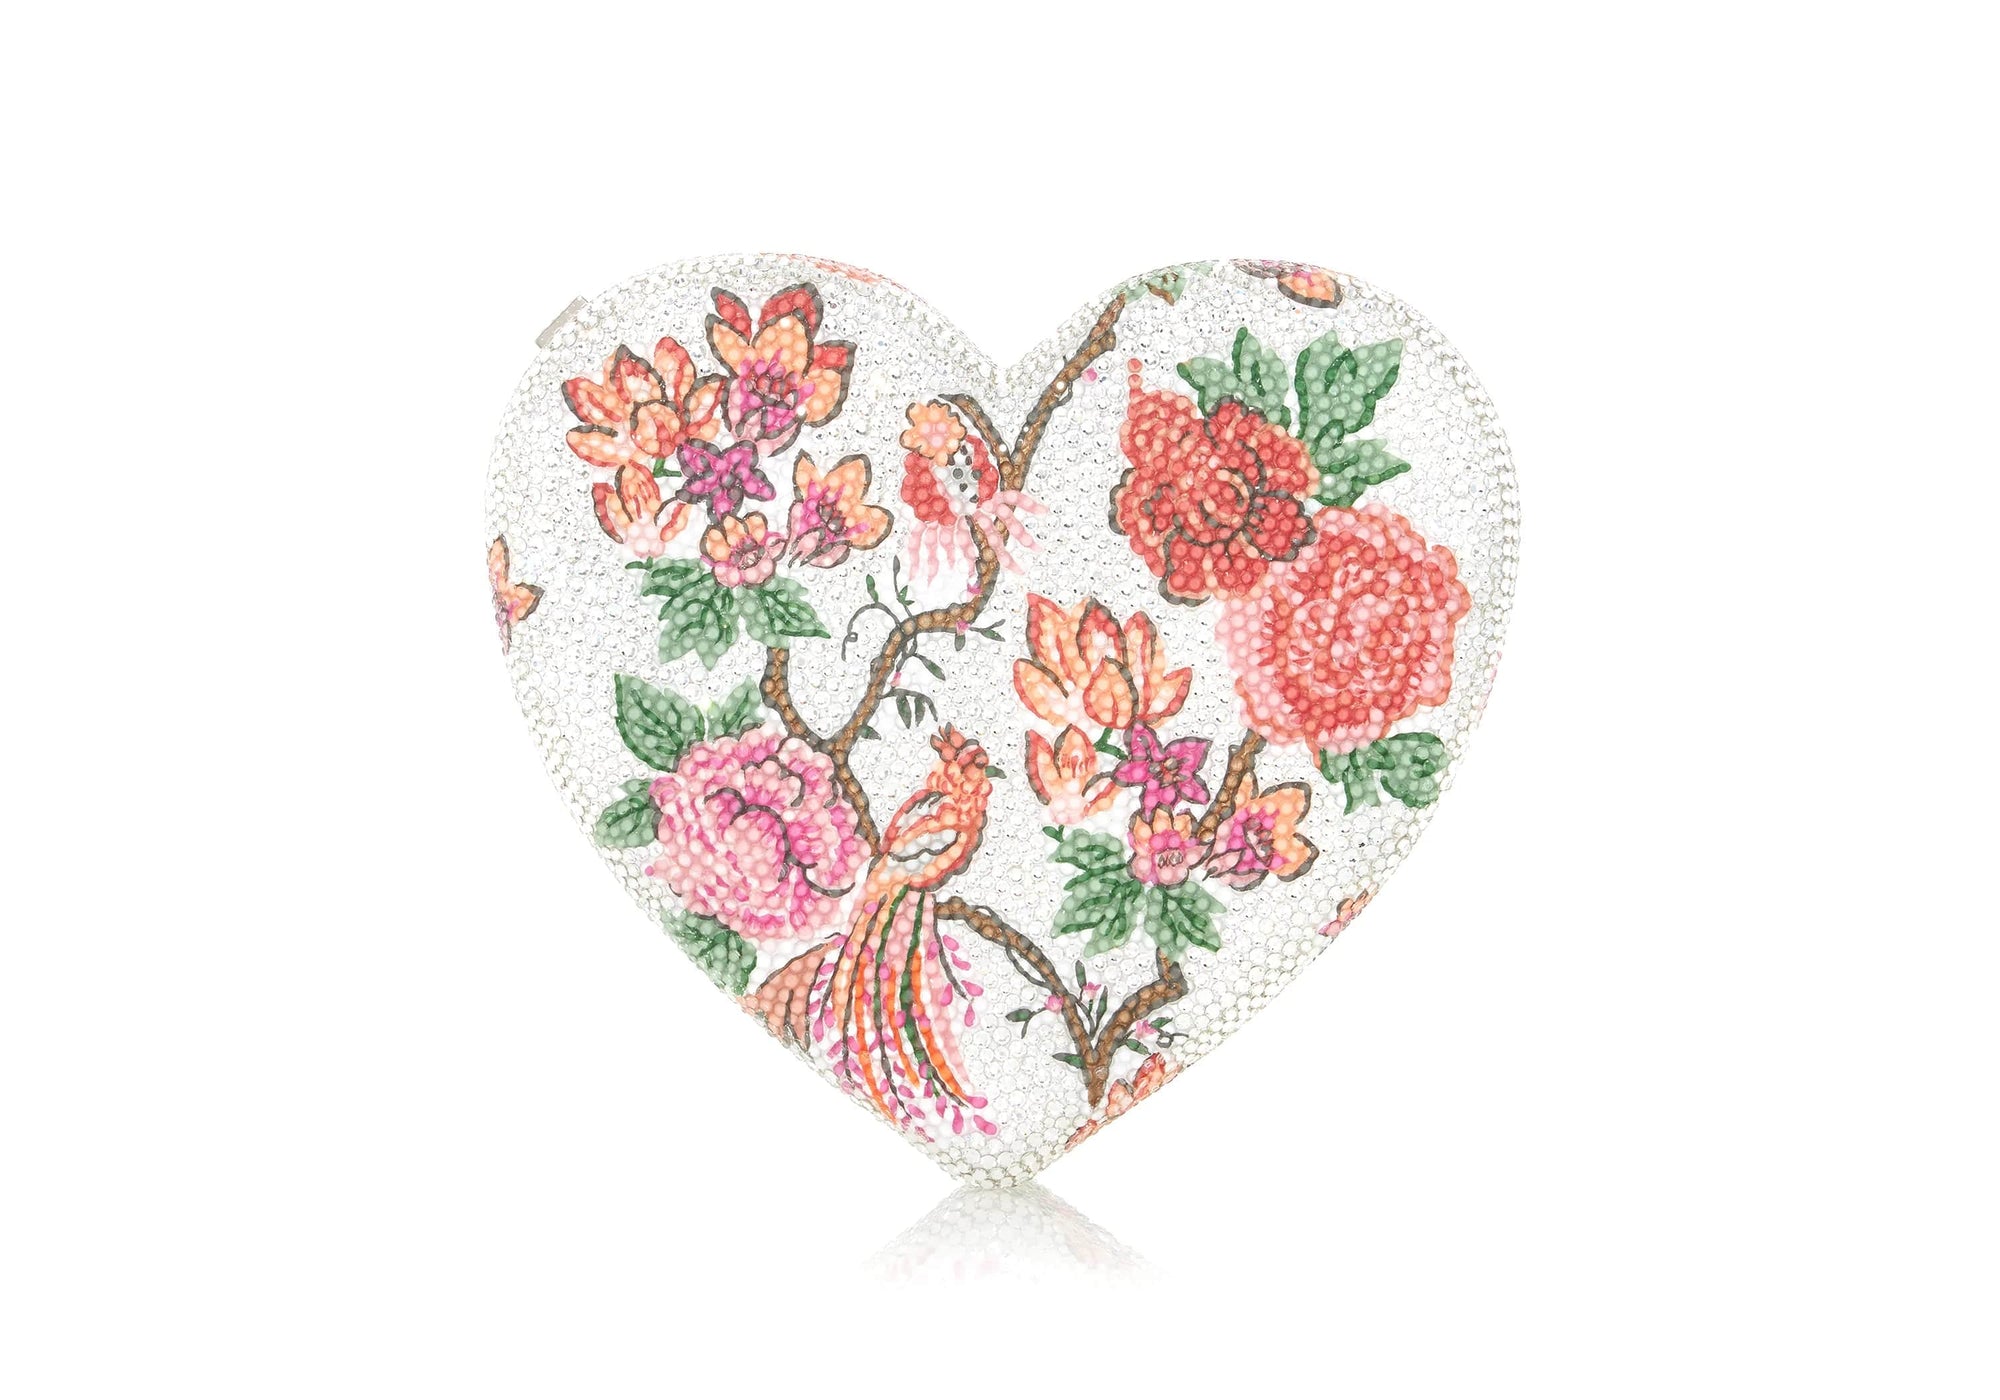 Heart Secret Garden  Crystal Minaudiere Handbag by Judith Leiber